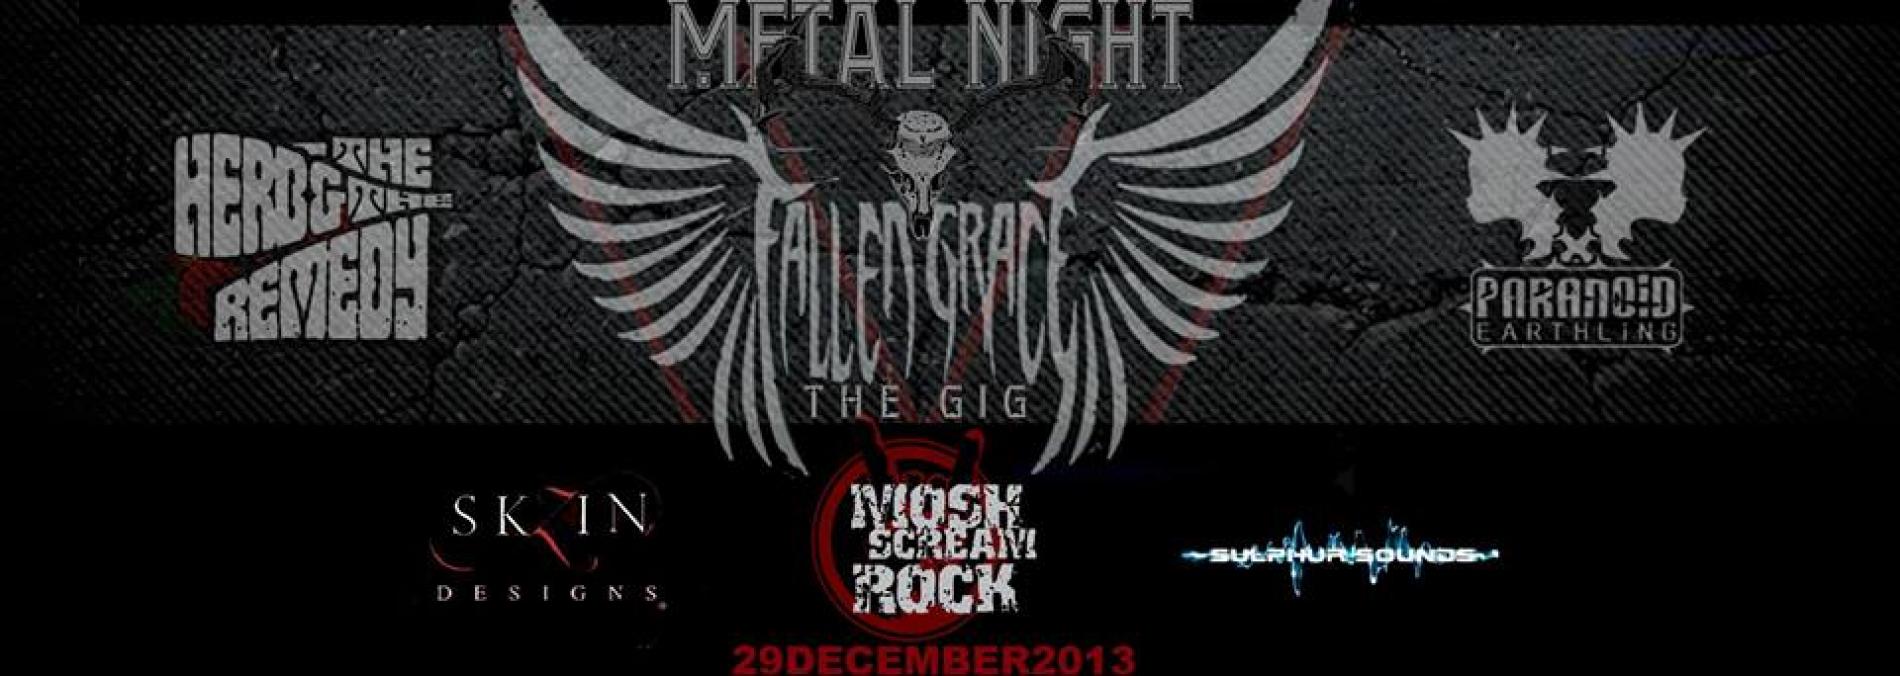 Metal Night: The Gig